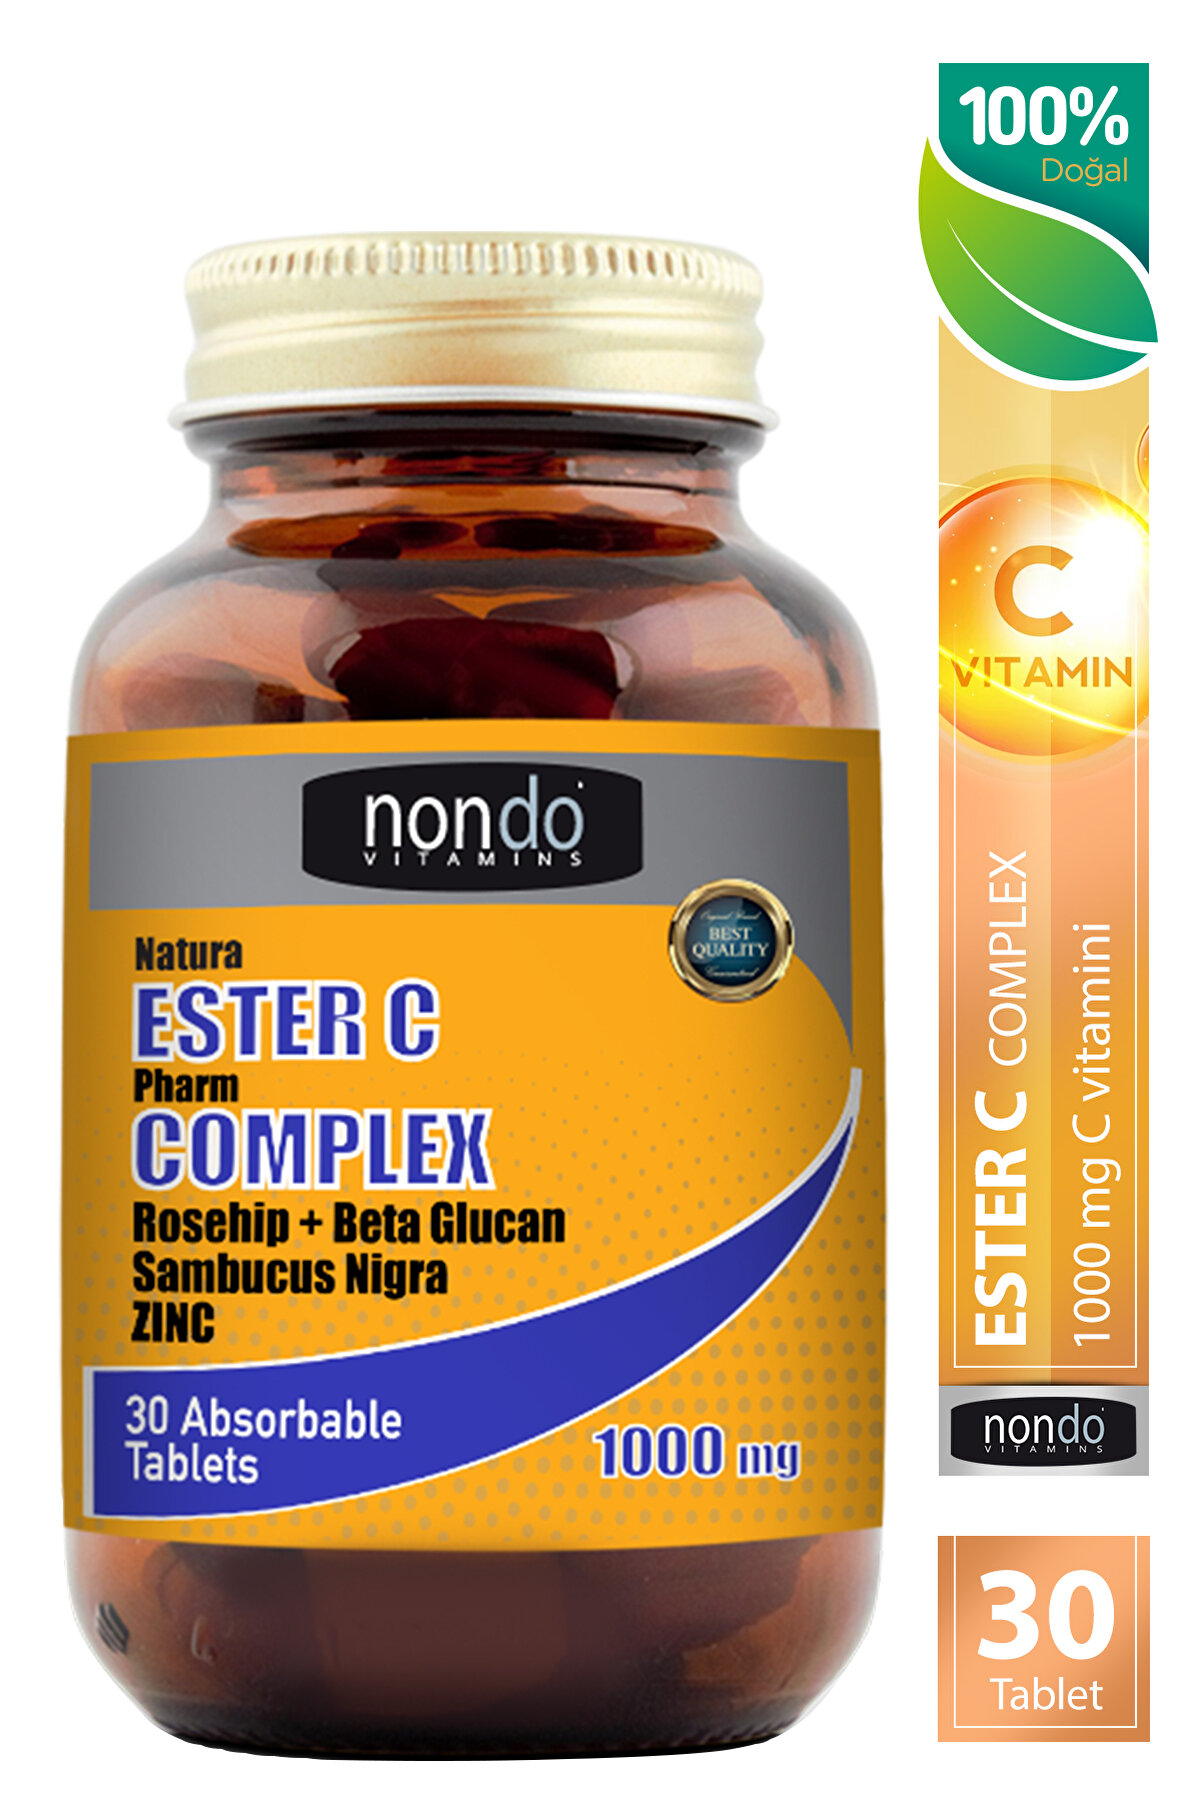 Nondo Ester C 1000 Mg C Vitamini Emilebilir 30 Tablet. (C VİTAMİNİ, KUŞ BURNU EKSTRESİ,)